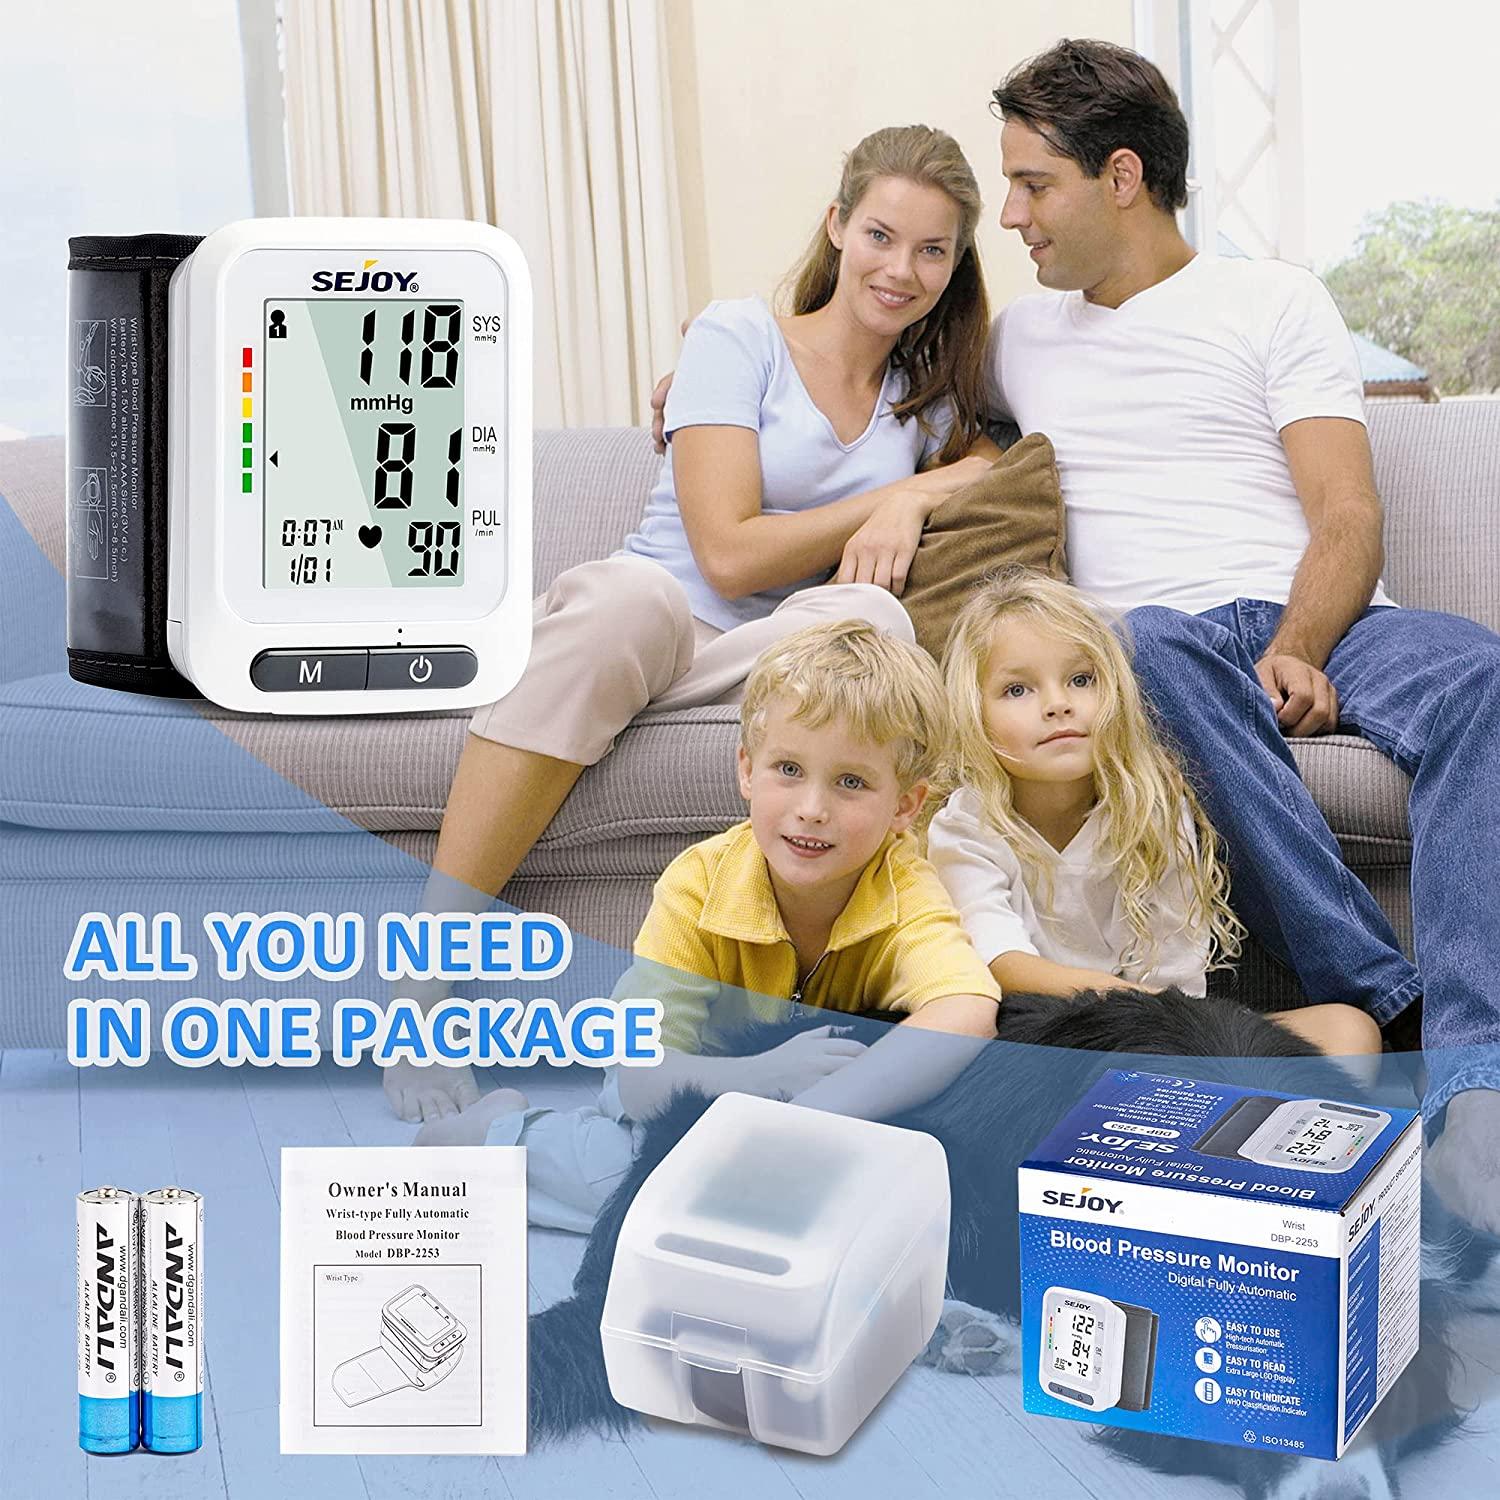 Children's blood pressure monitors - Blood pressure meter.shop